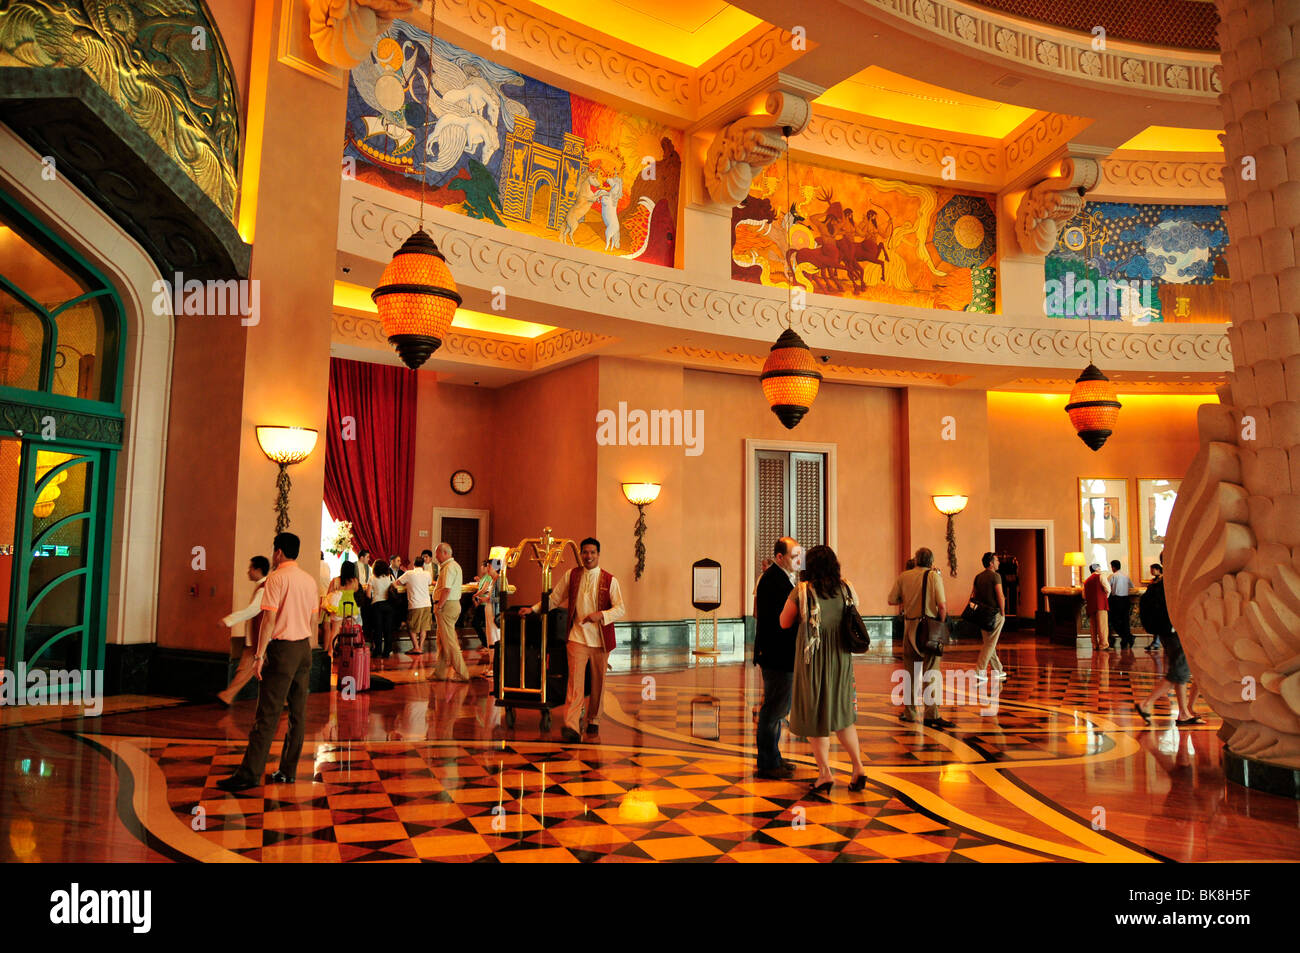 Lobby of the Hotel Atlantis, The Palm Jumeirah, Dubai, United Arab Emirates, Arabia, Middle East, Orient Stock Photo